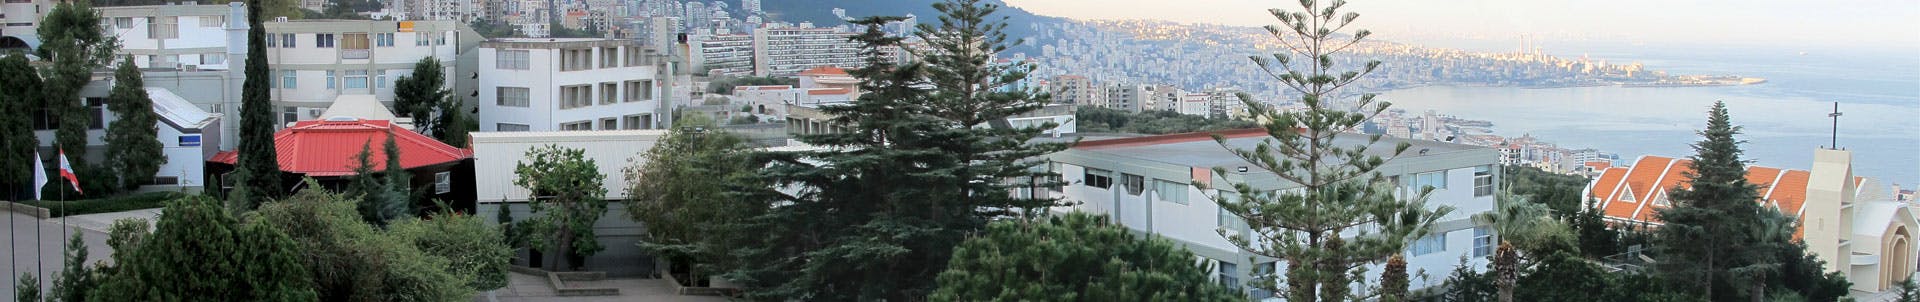 Collège des Saints-Cœurs Kfarhbab